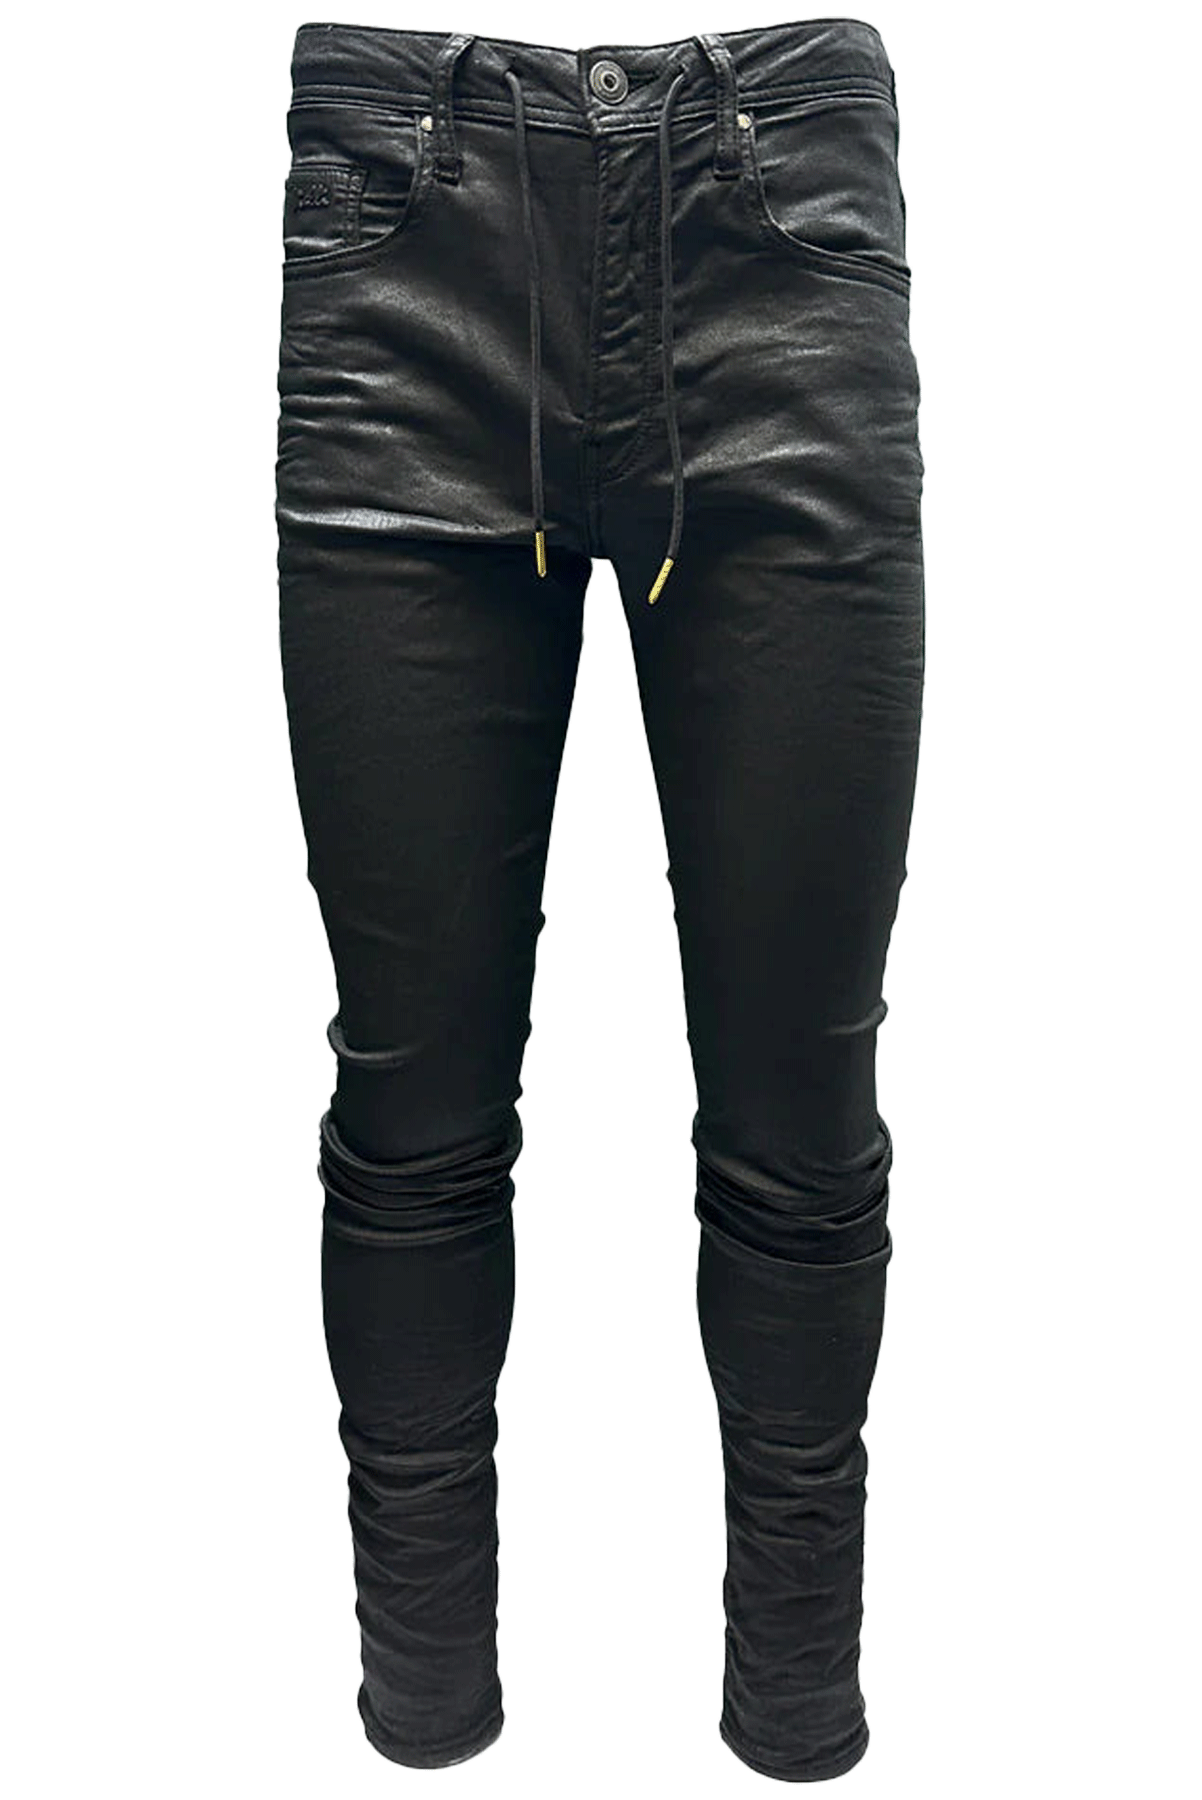 Vialli Elvinios Wax Strato Fit Black Jean